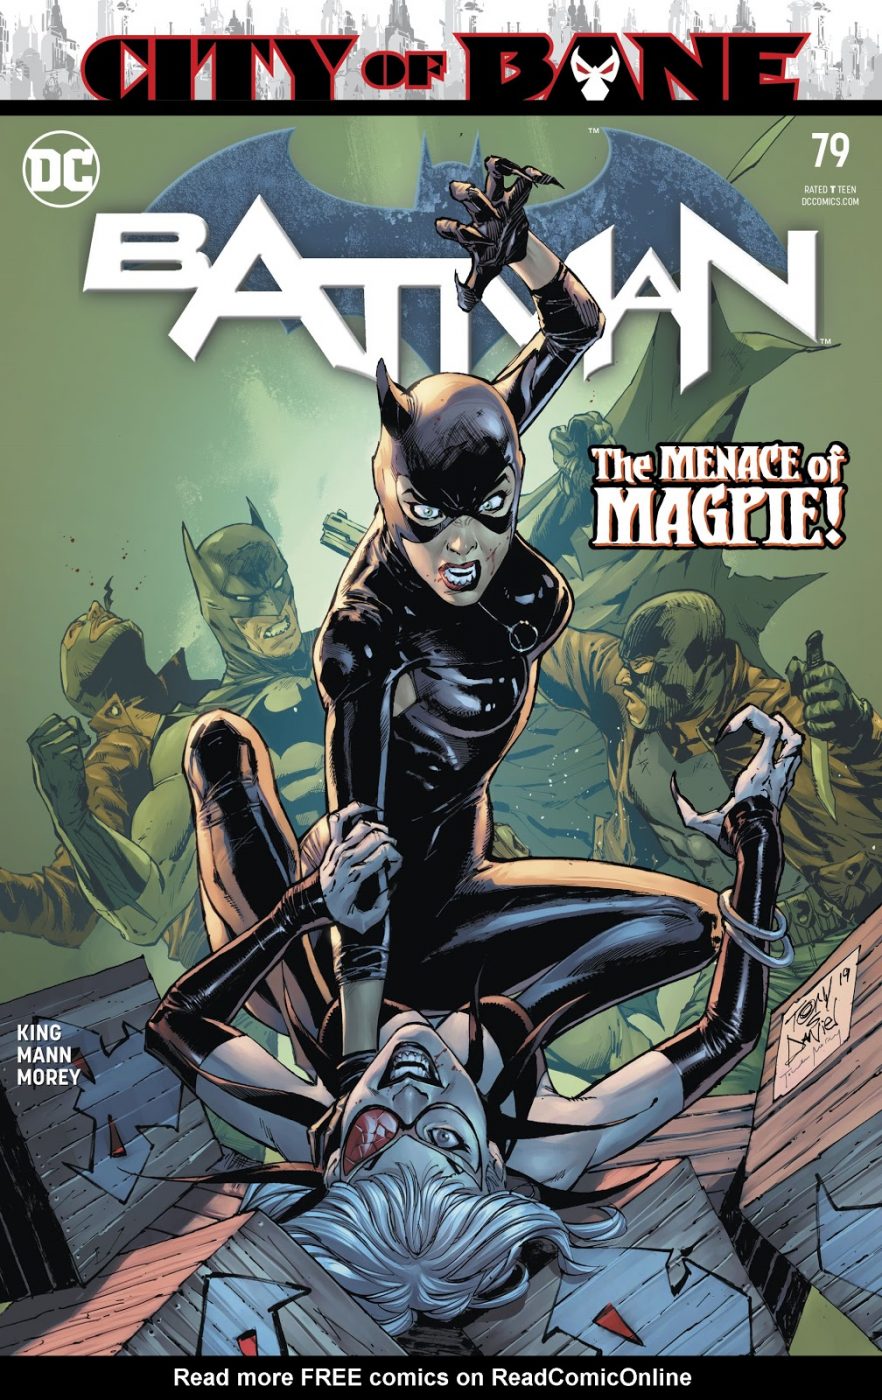 Batman #79 Cover by Tony S. Daniel